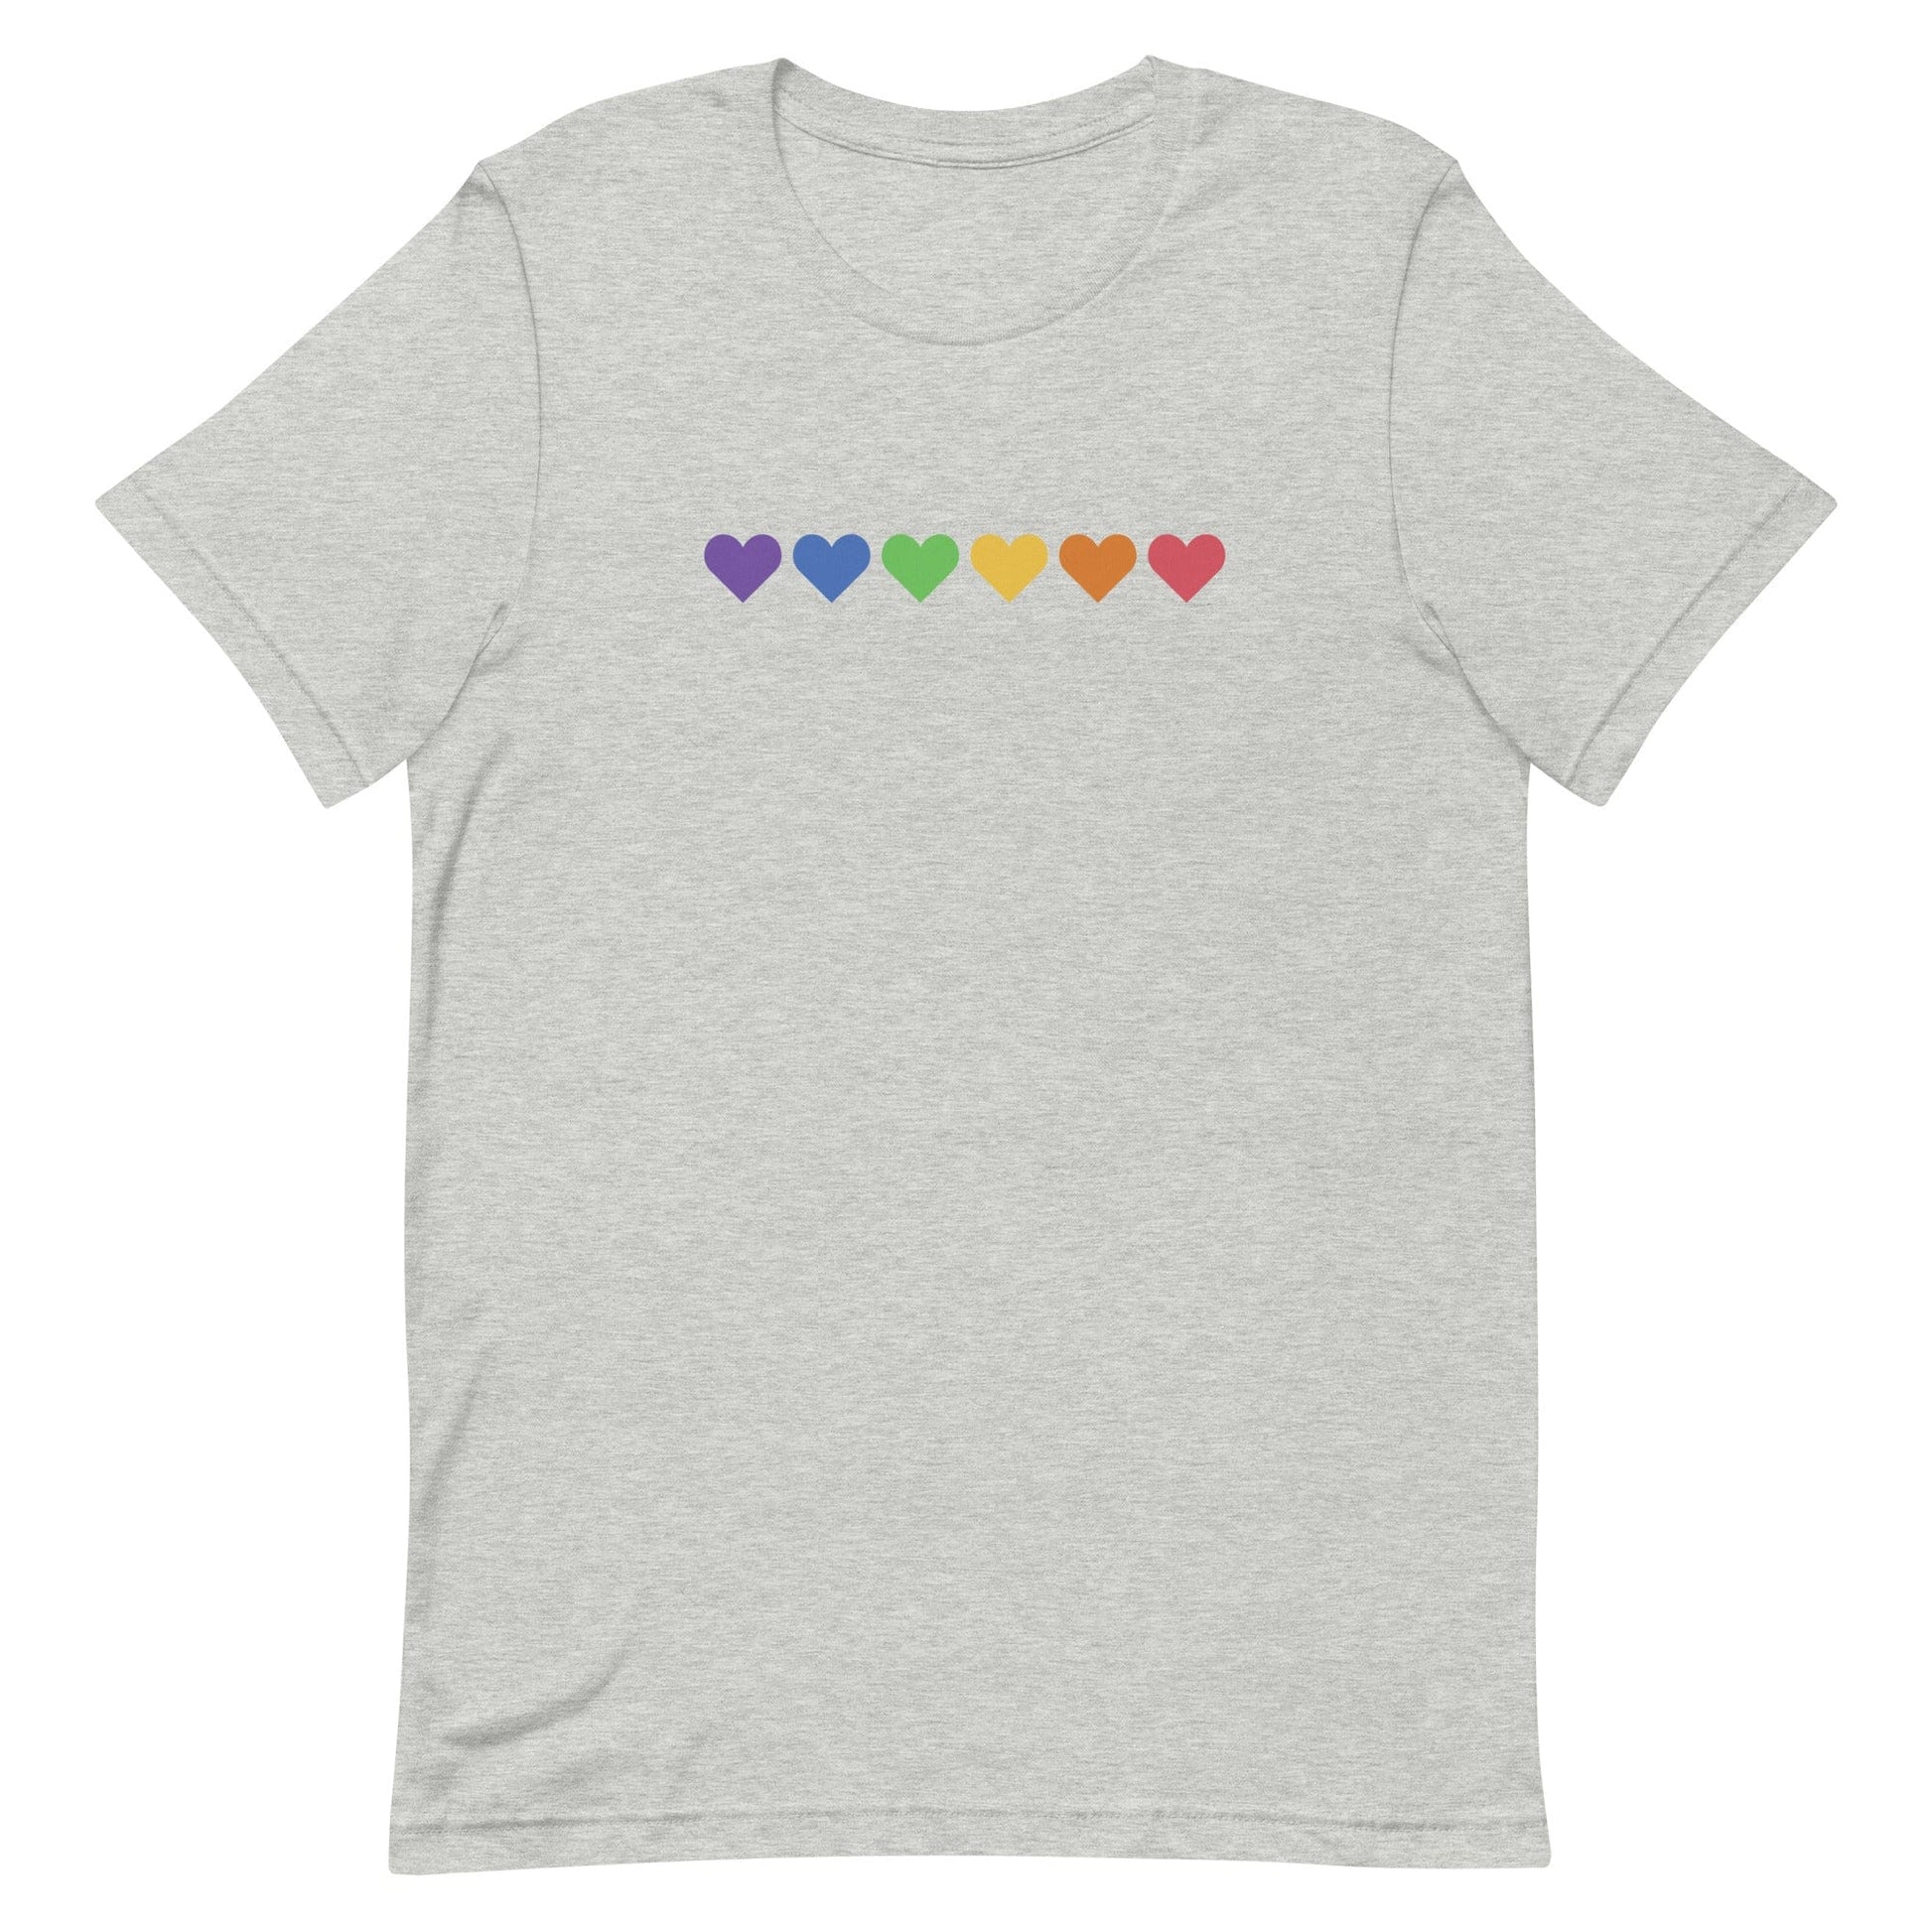 front-grey-genderless-hearts-pride-t-shirt-by-feminist-define